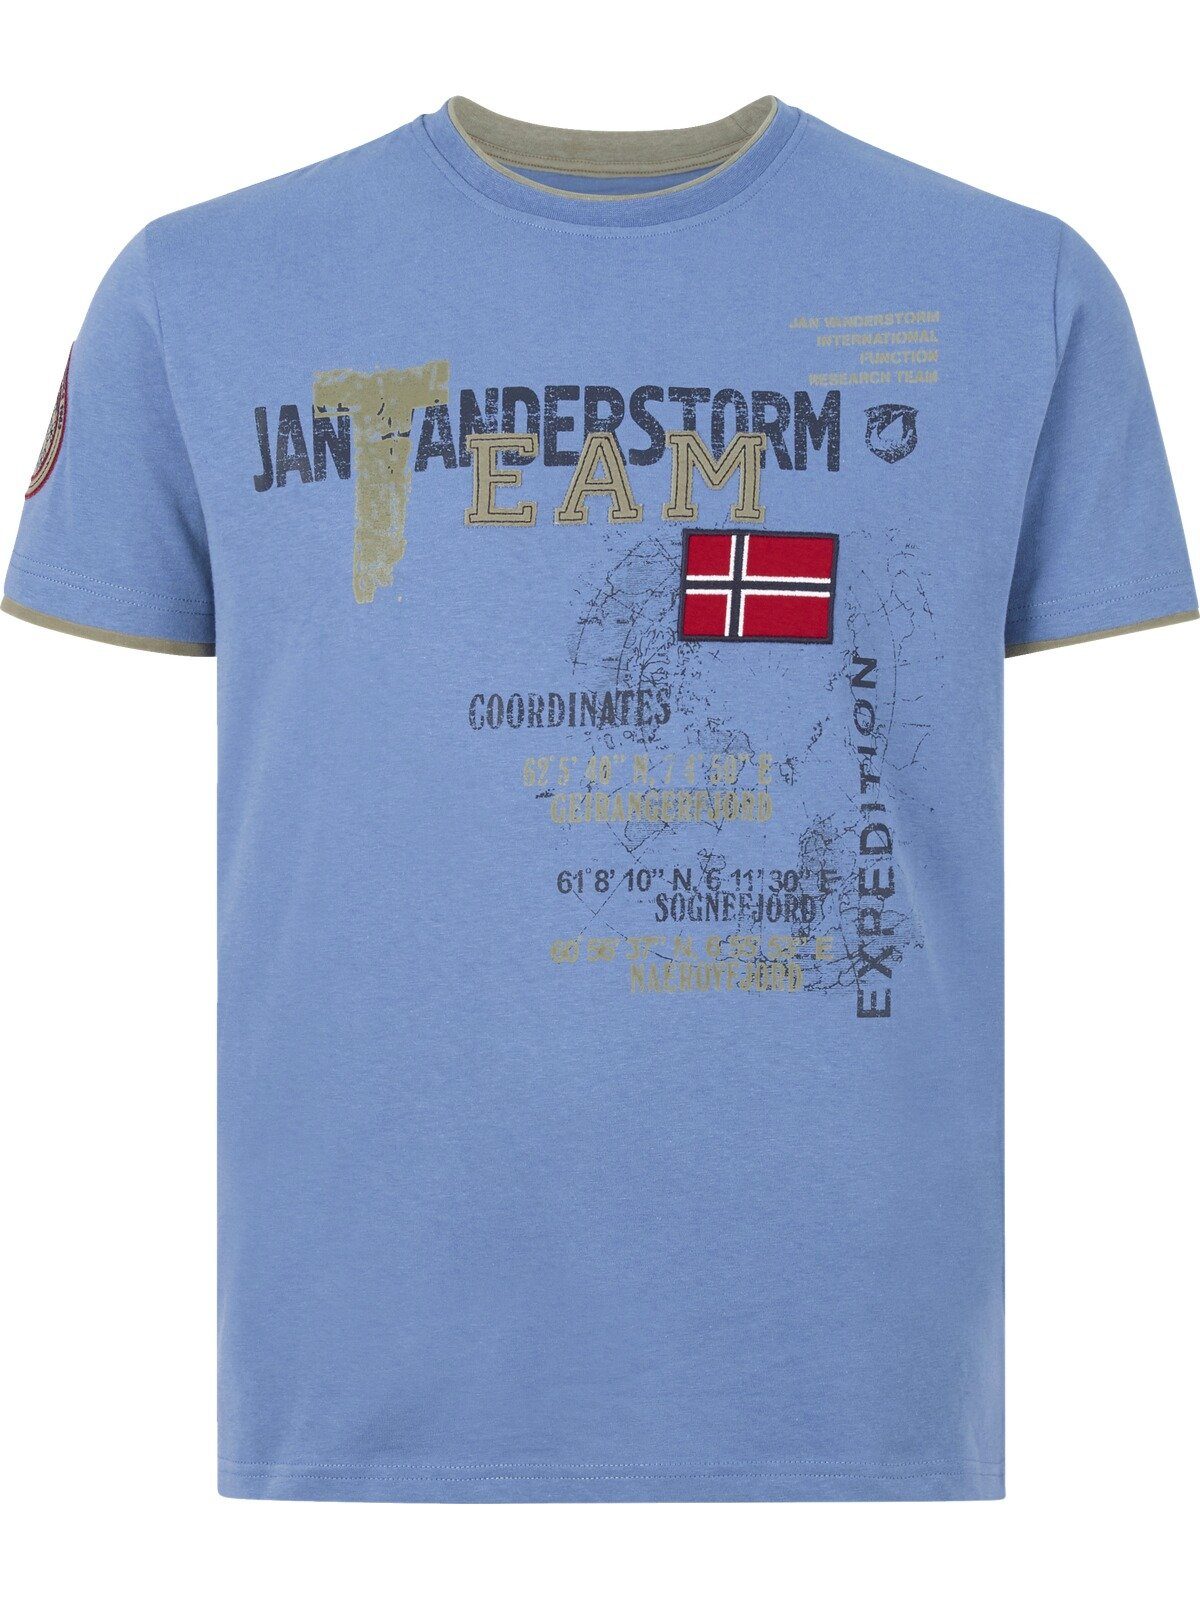 T-Shirt SÖLVE robustem aus Jan hellblau Baumwolljersey Vanderstorm